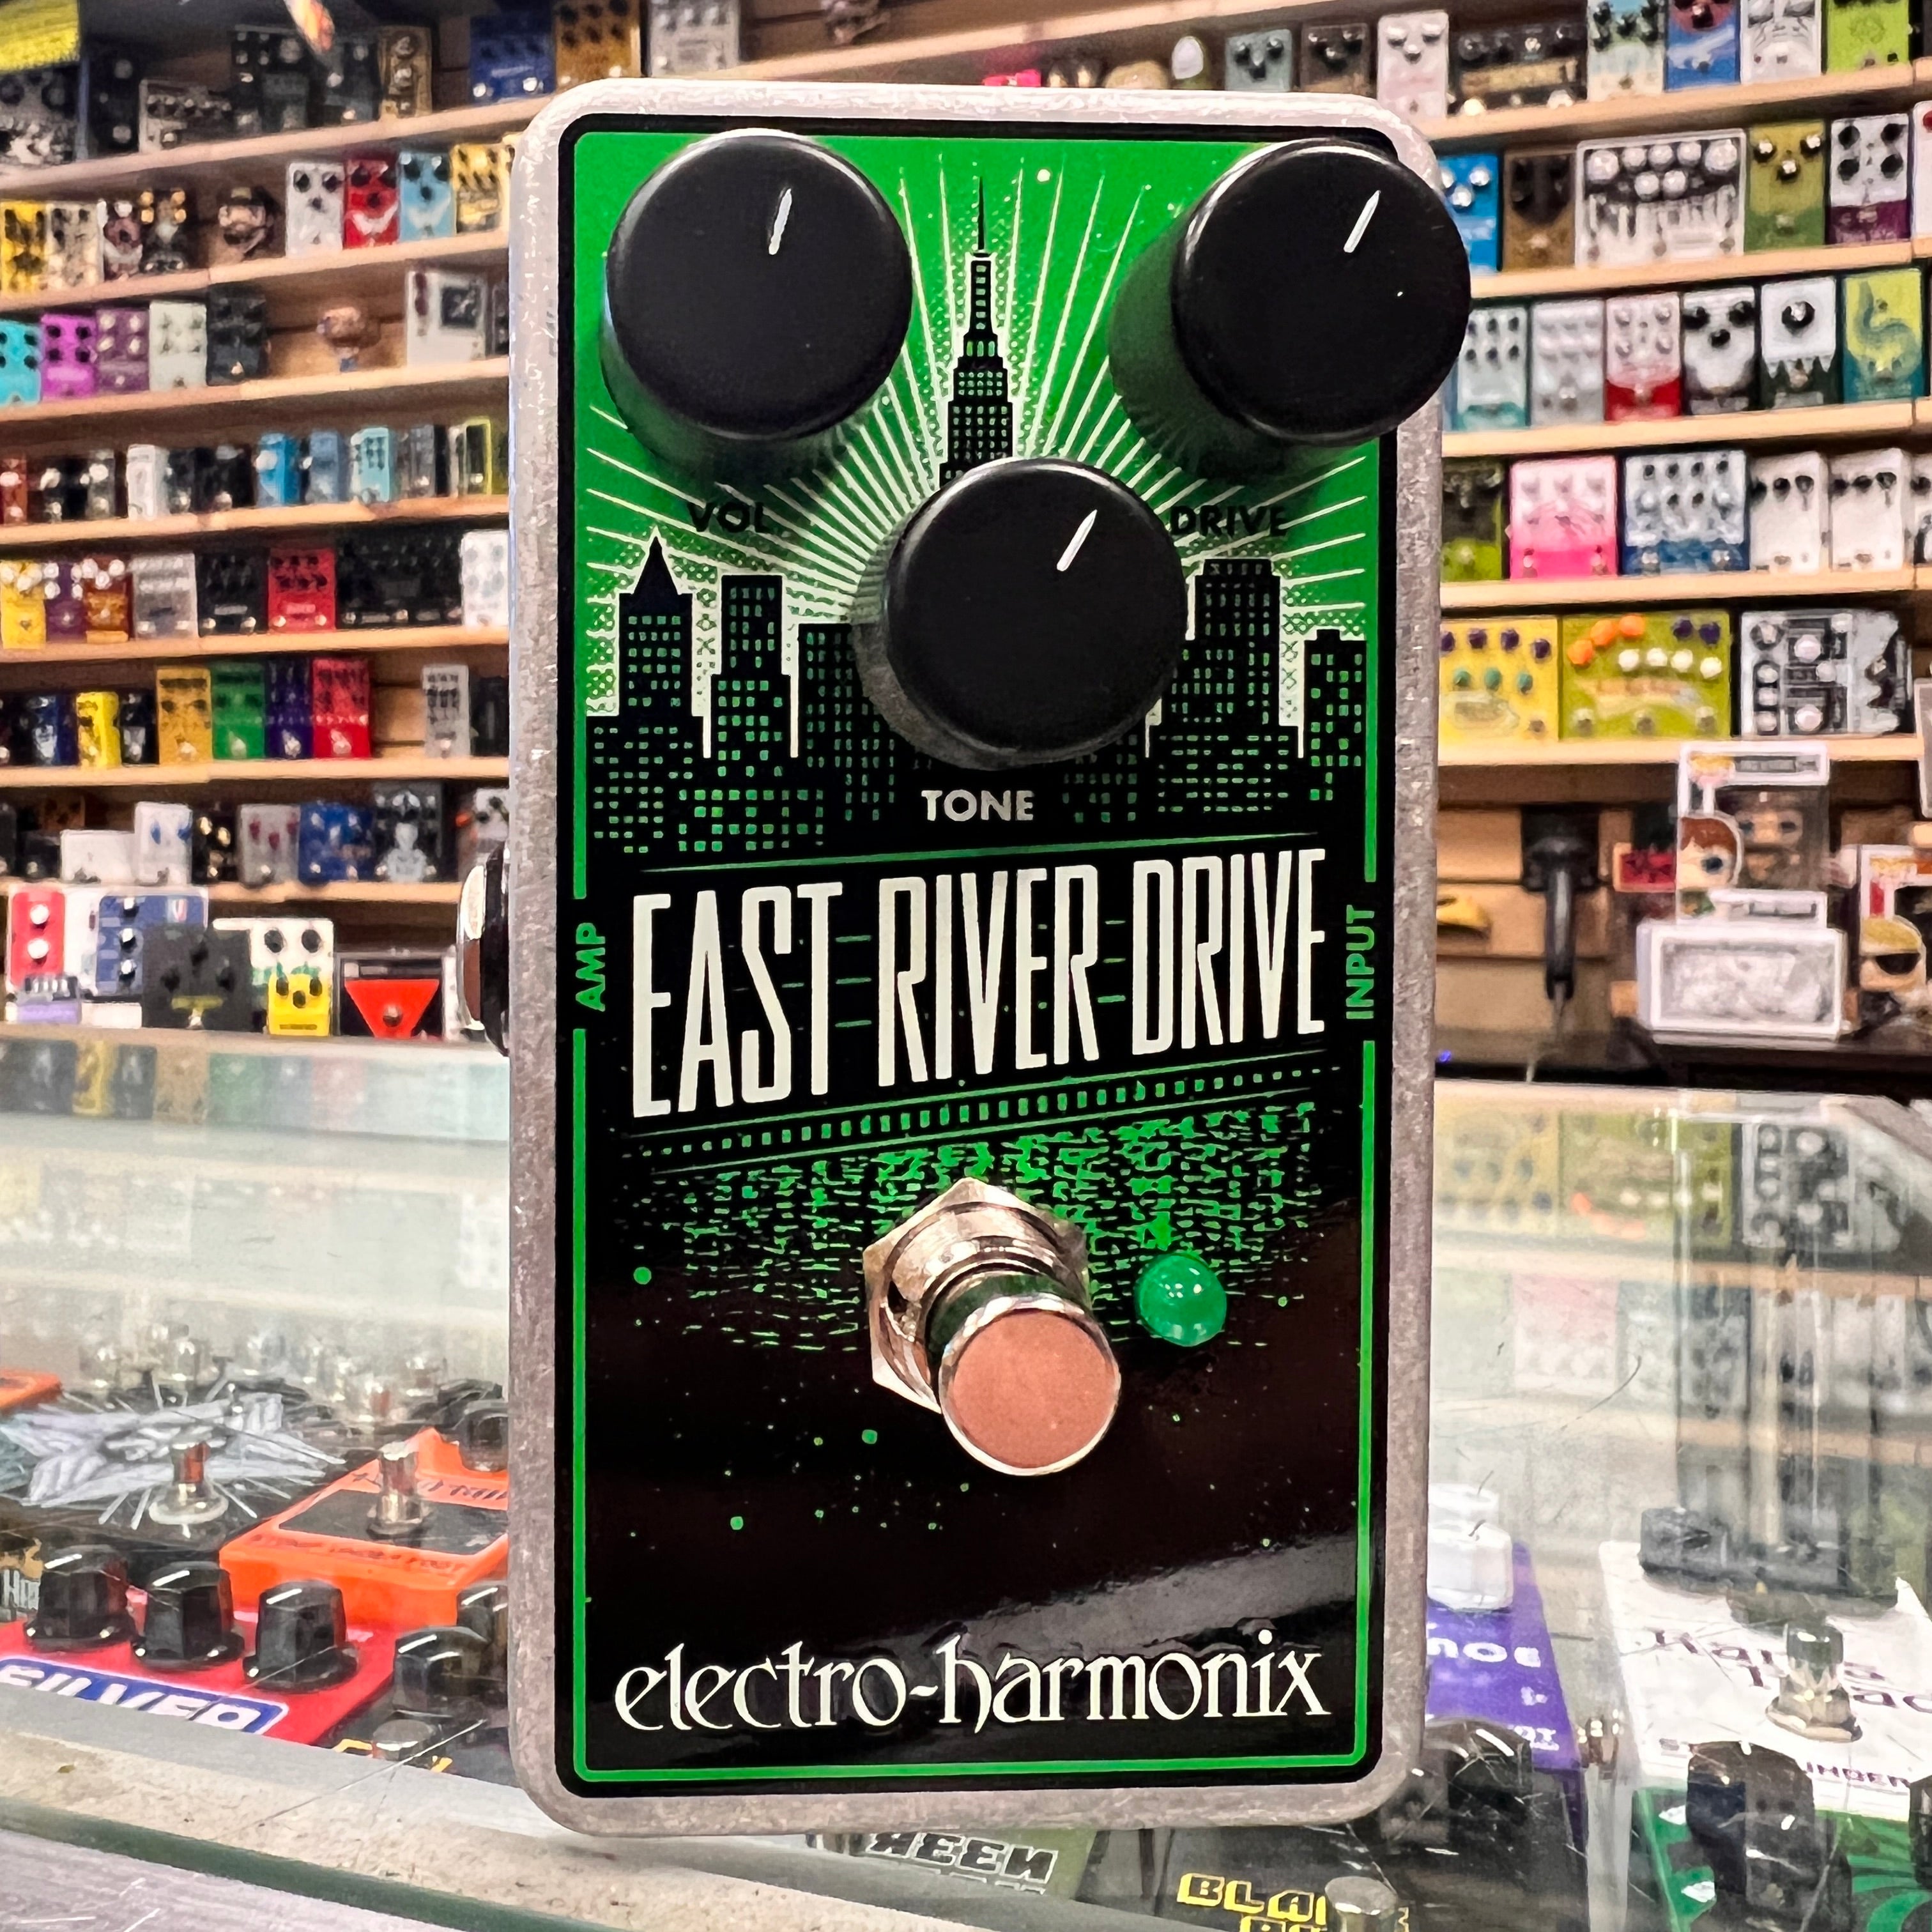 Electro-Harmonix East River Drive Overdrive Pedal